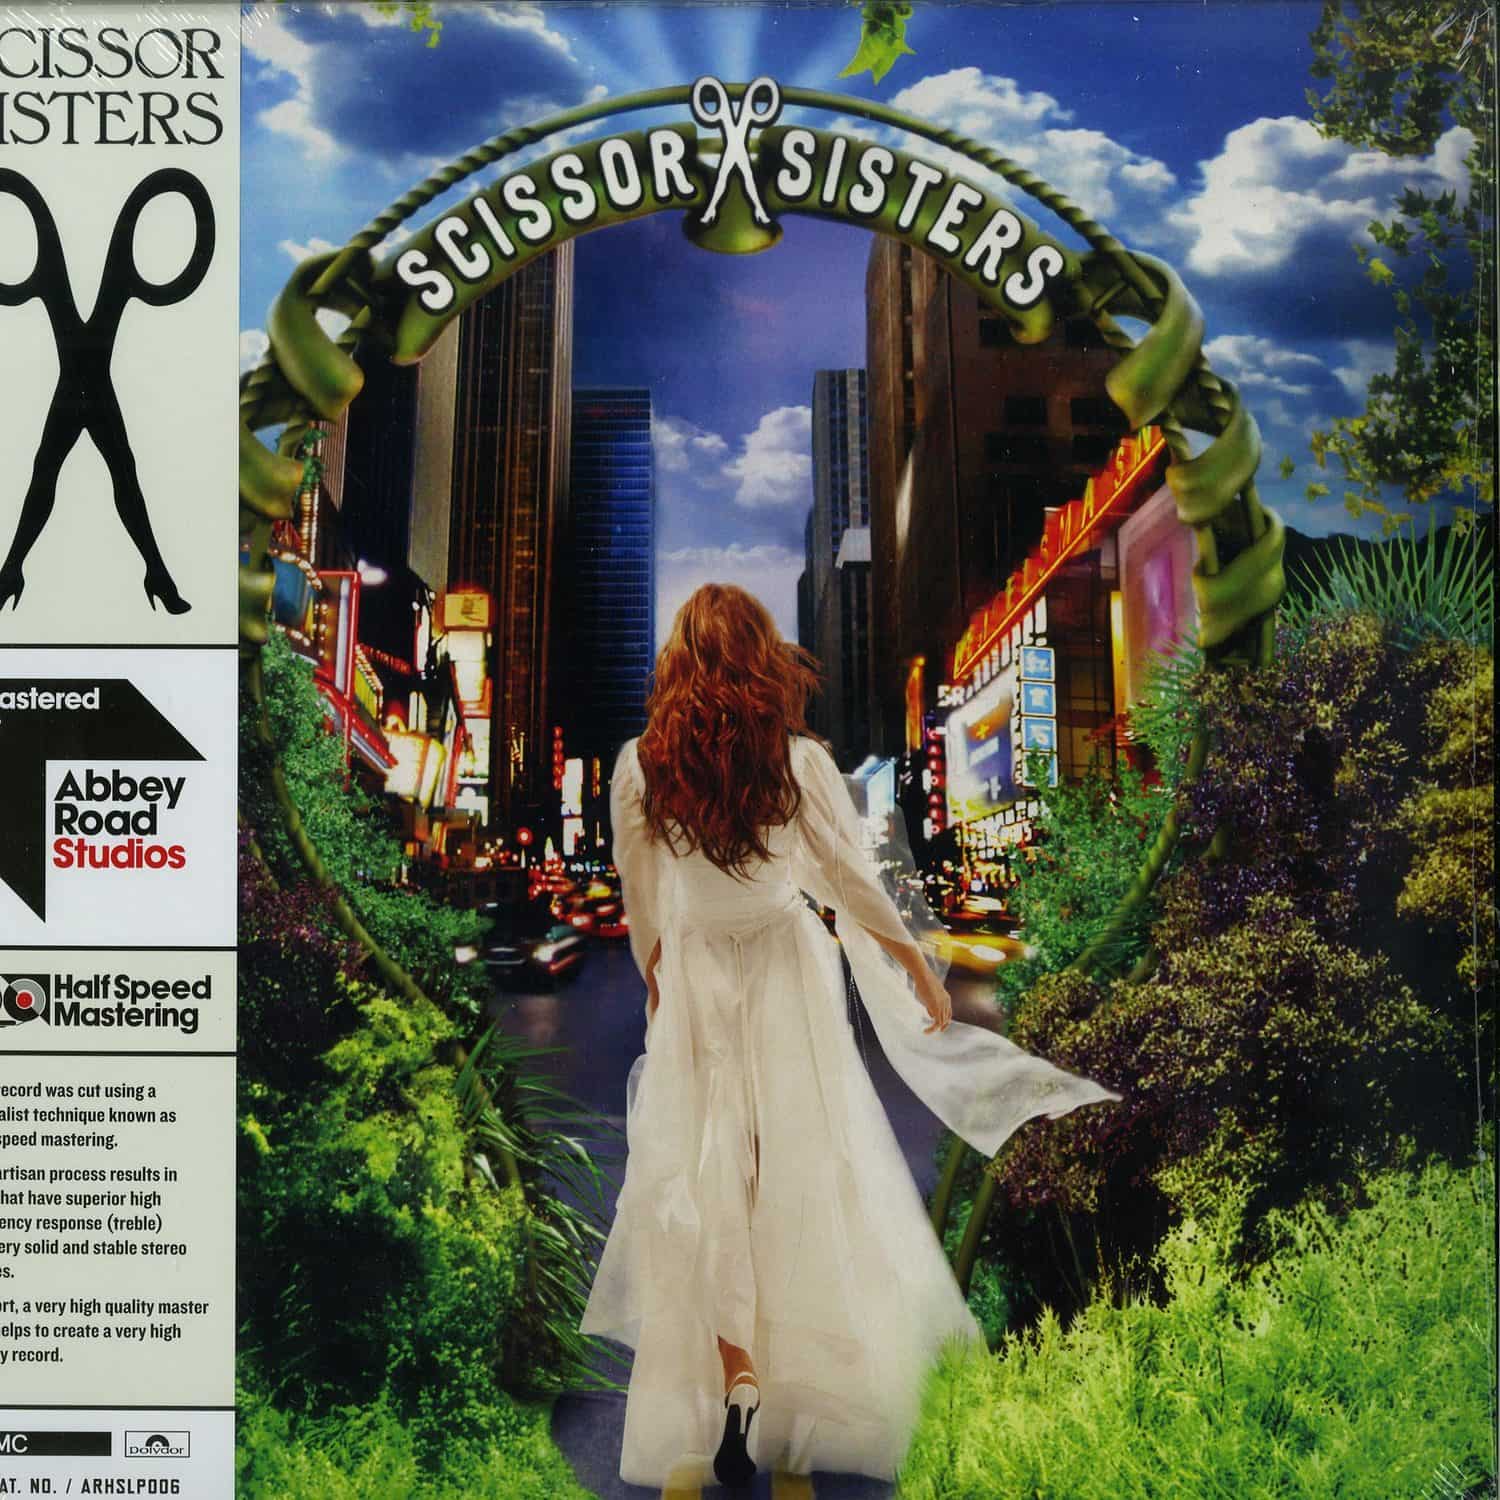 Scissor Sisters - SCISSOR SISTERS 